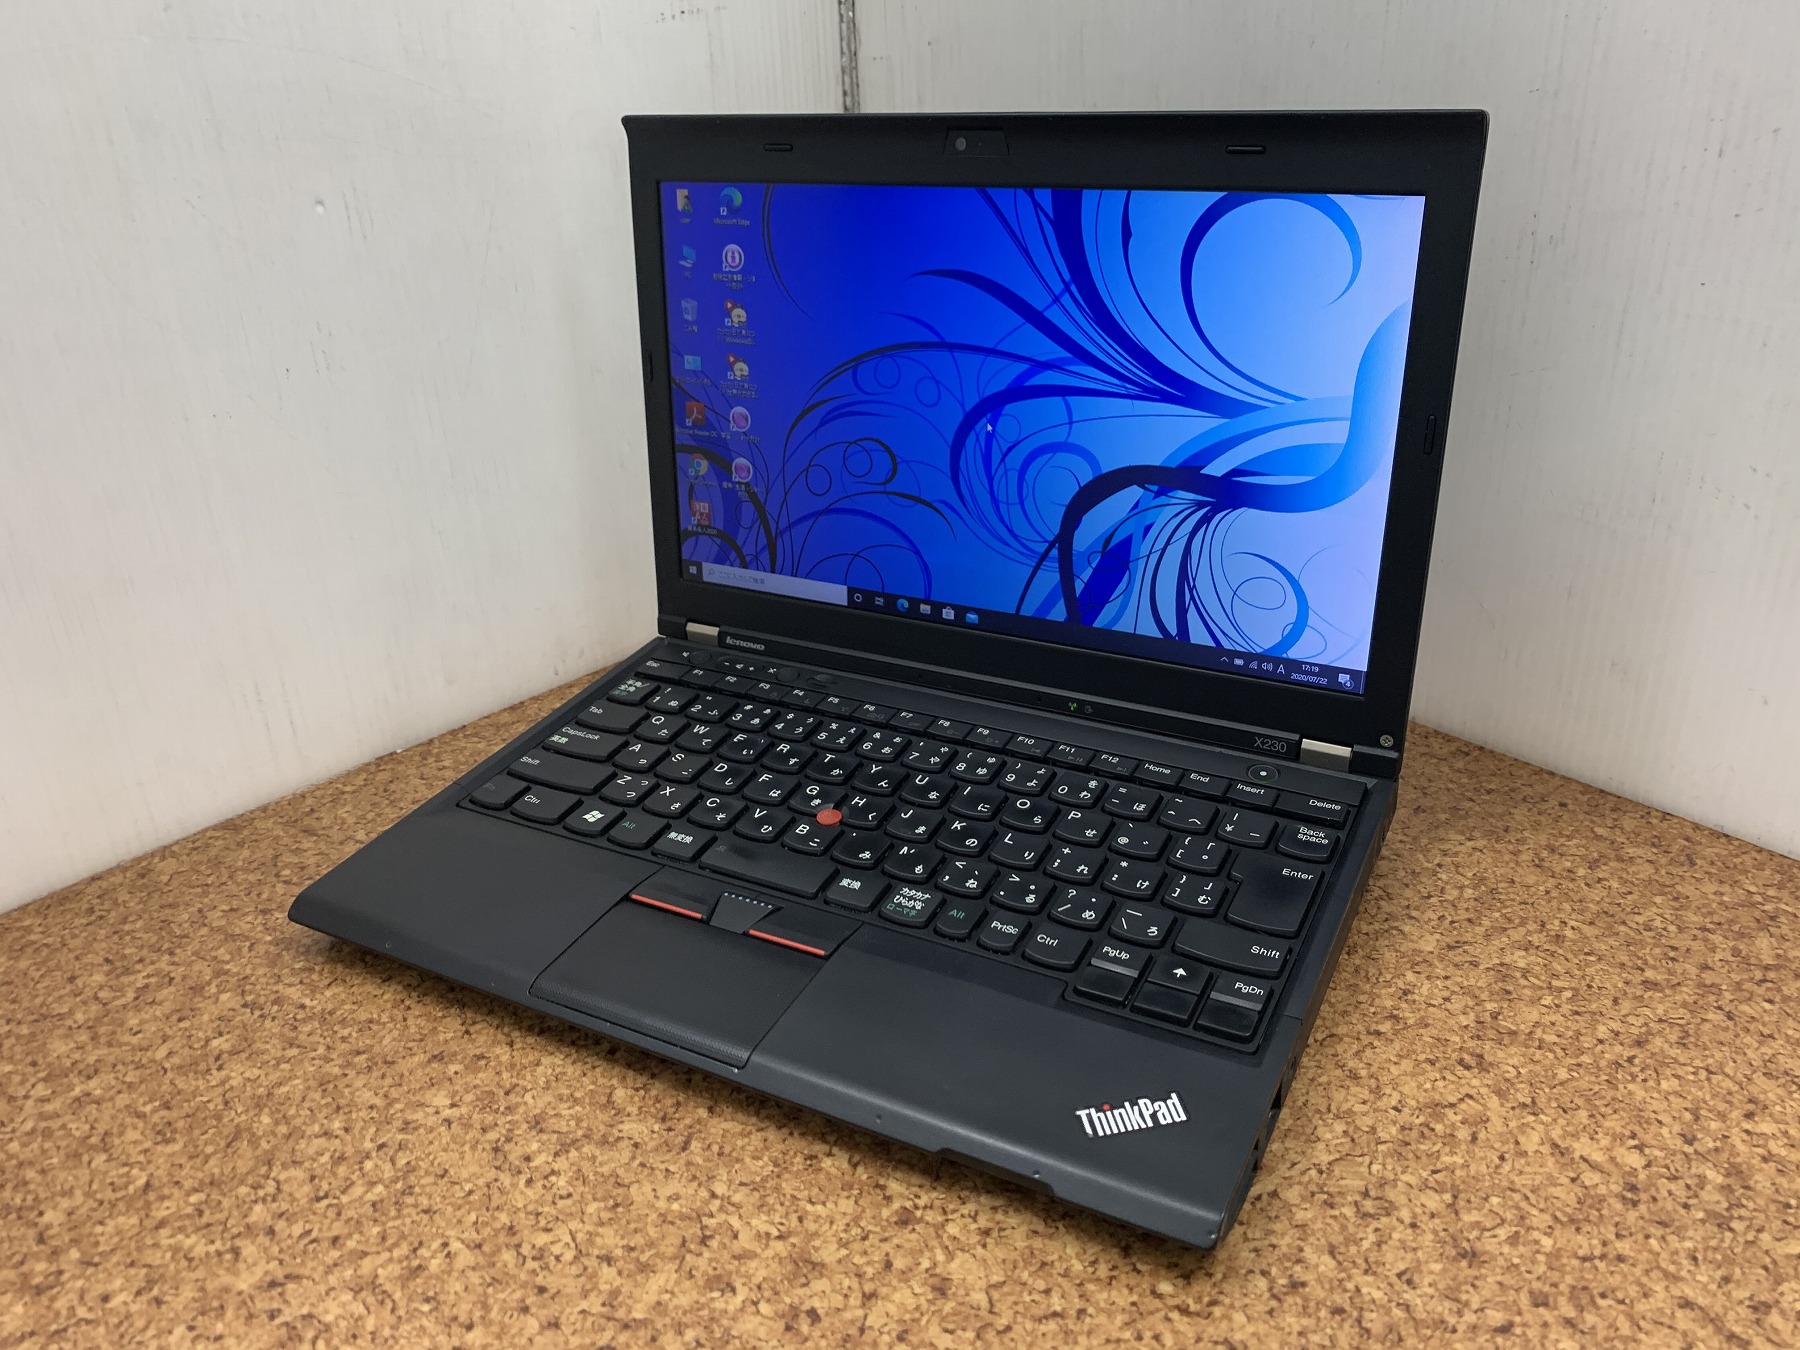 Lenovo ThinkPad X230 CPU：Core i5 3210M 2.5GHz / メモリ：4GB / SSD 120GB